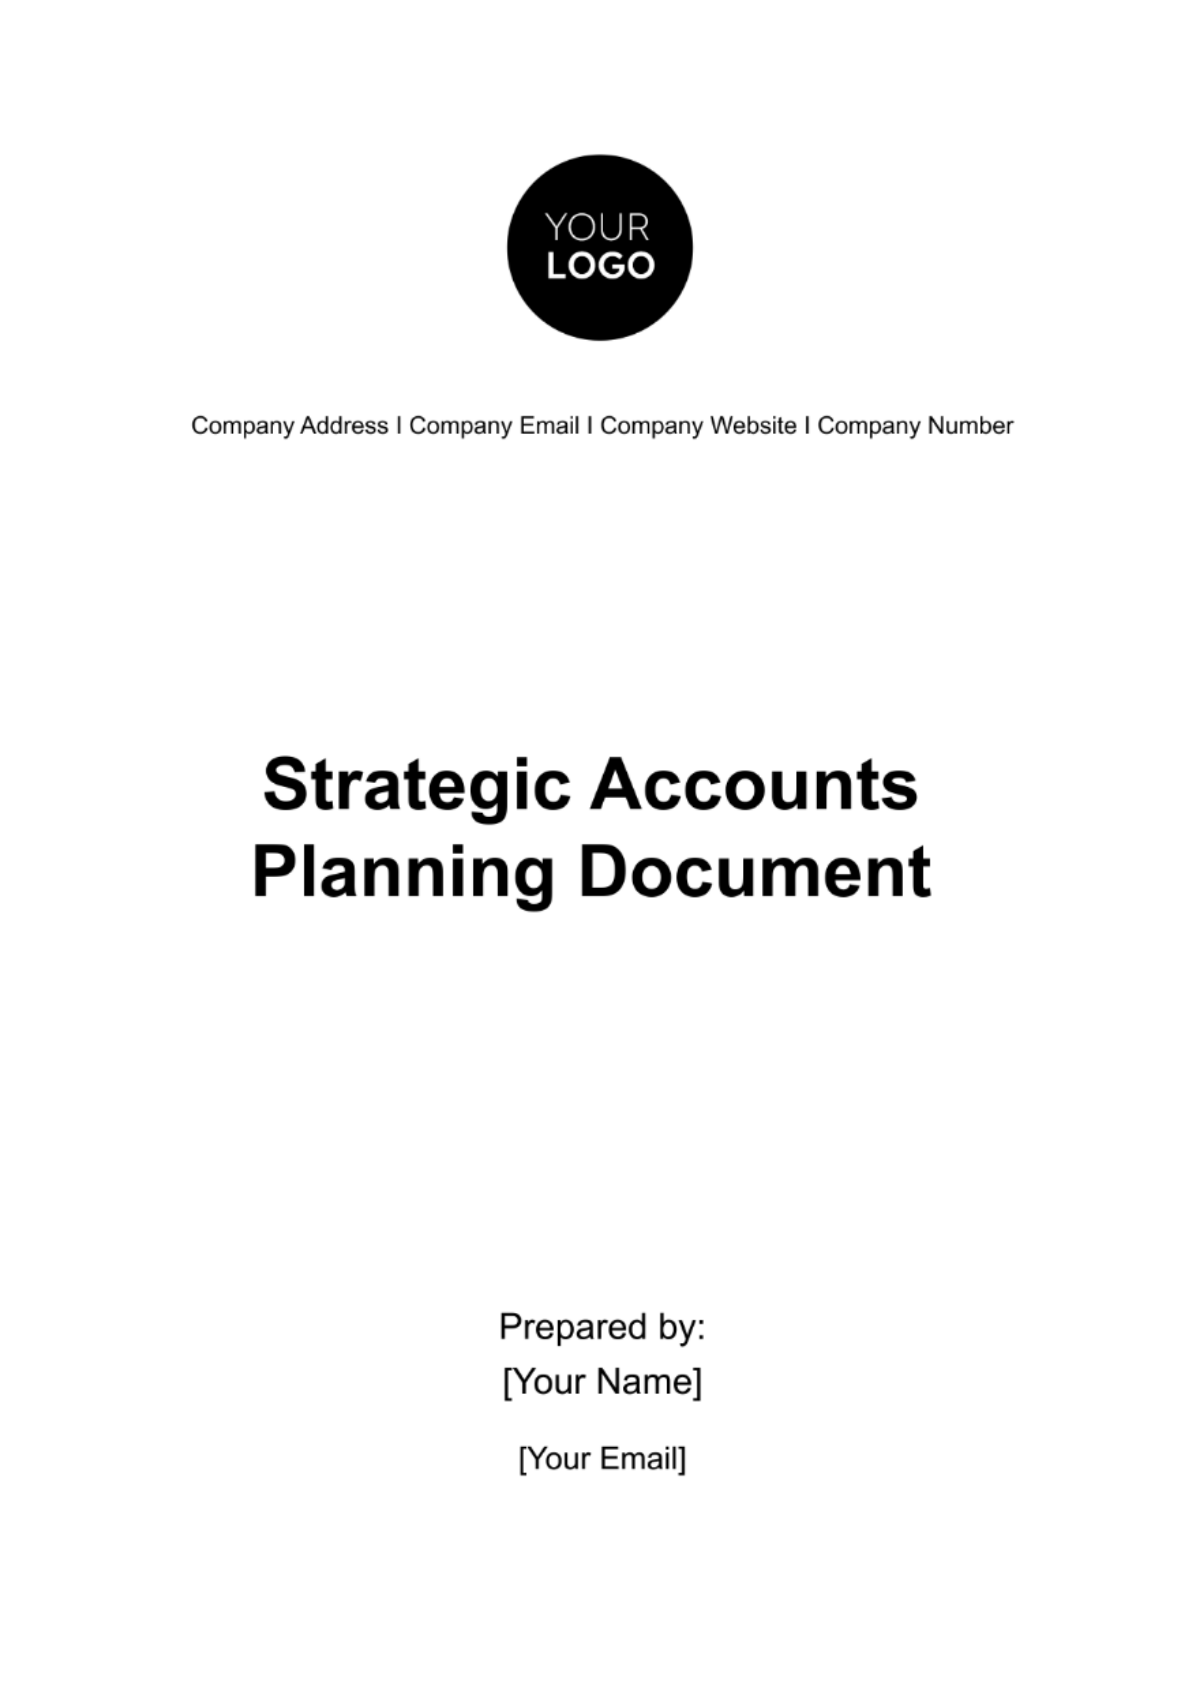 Strategic Accounts Planning Document Template